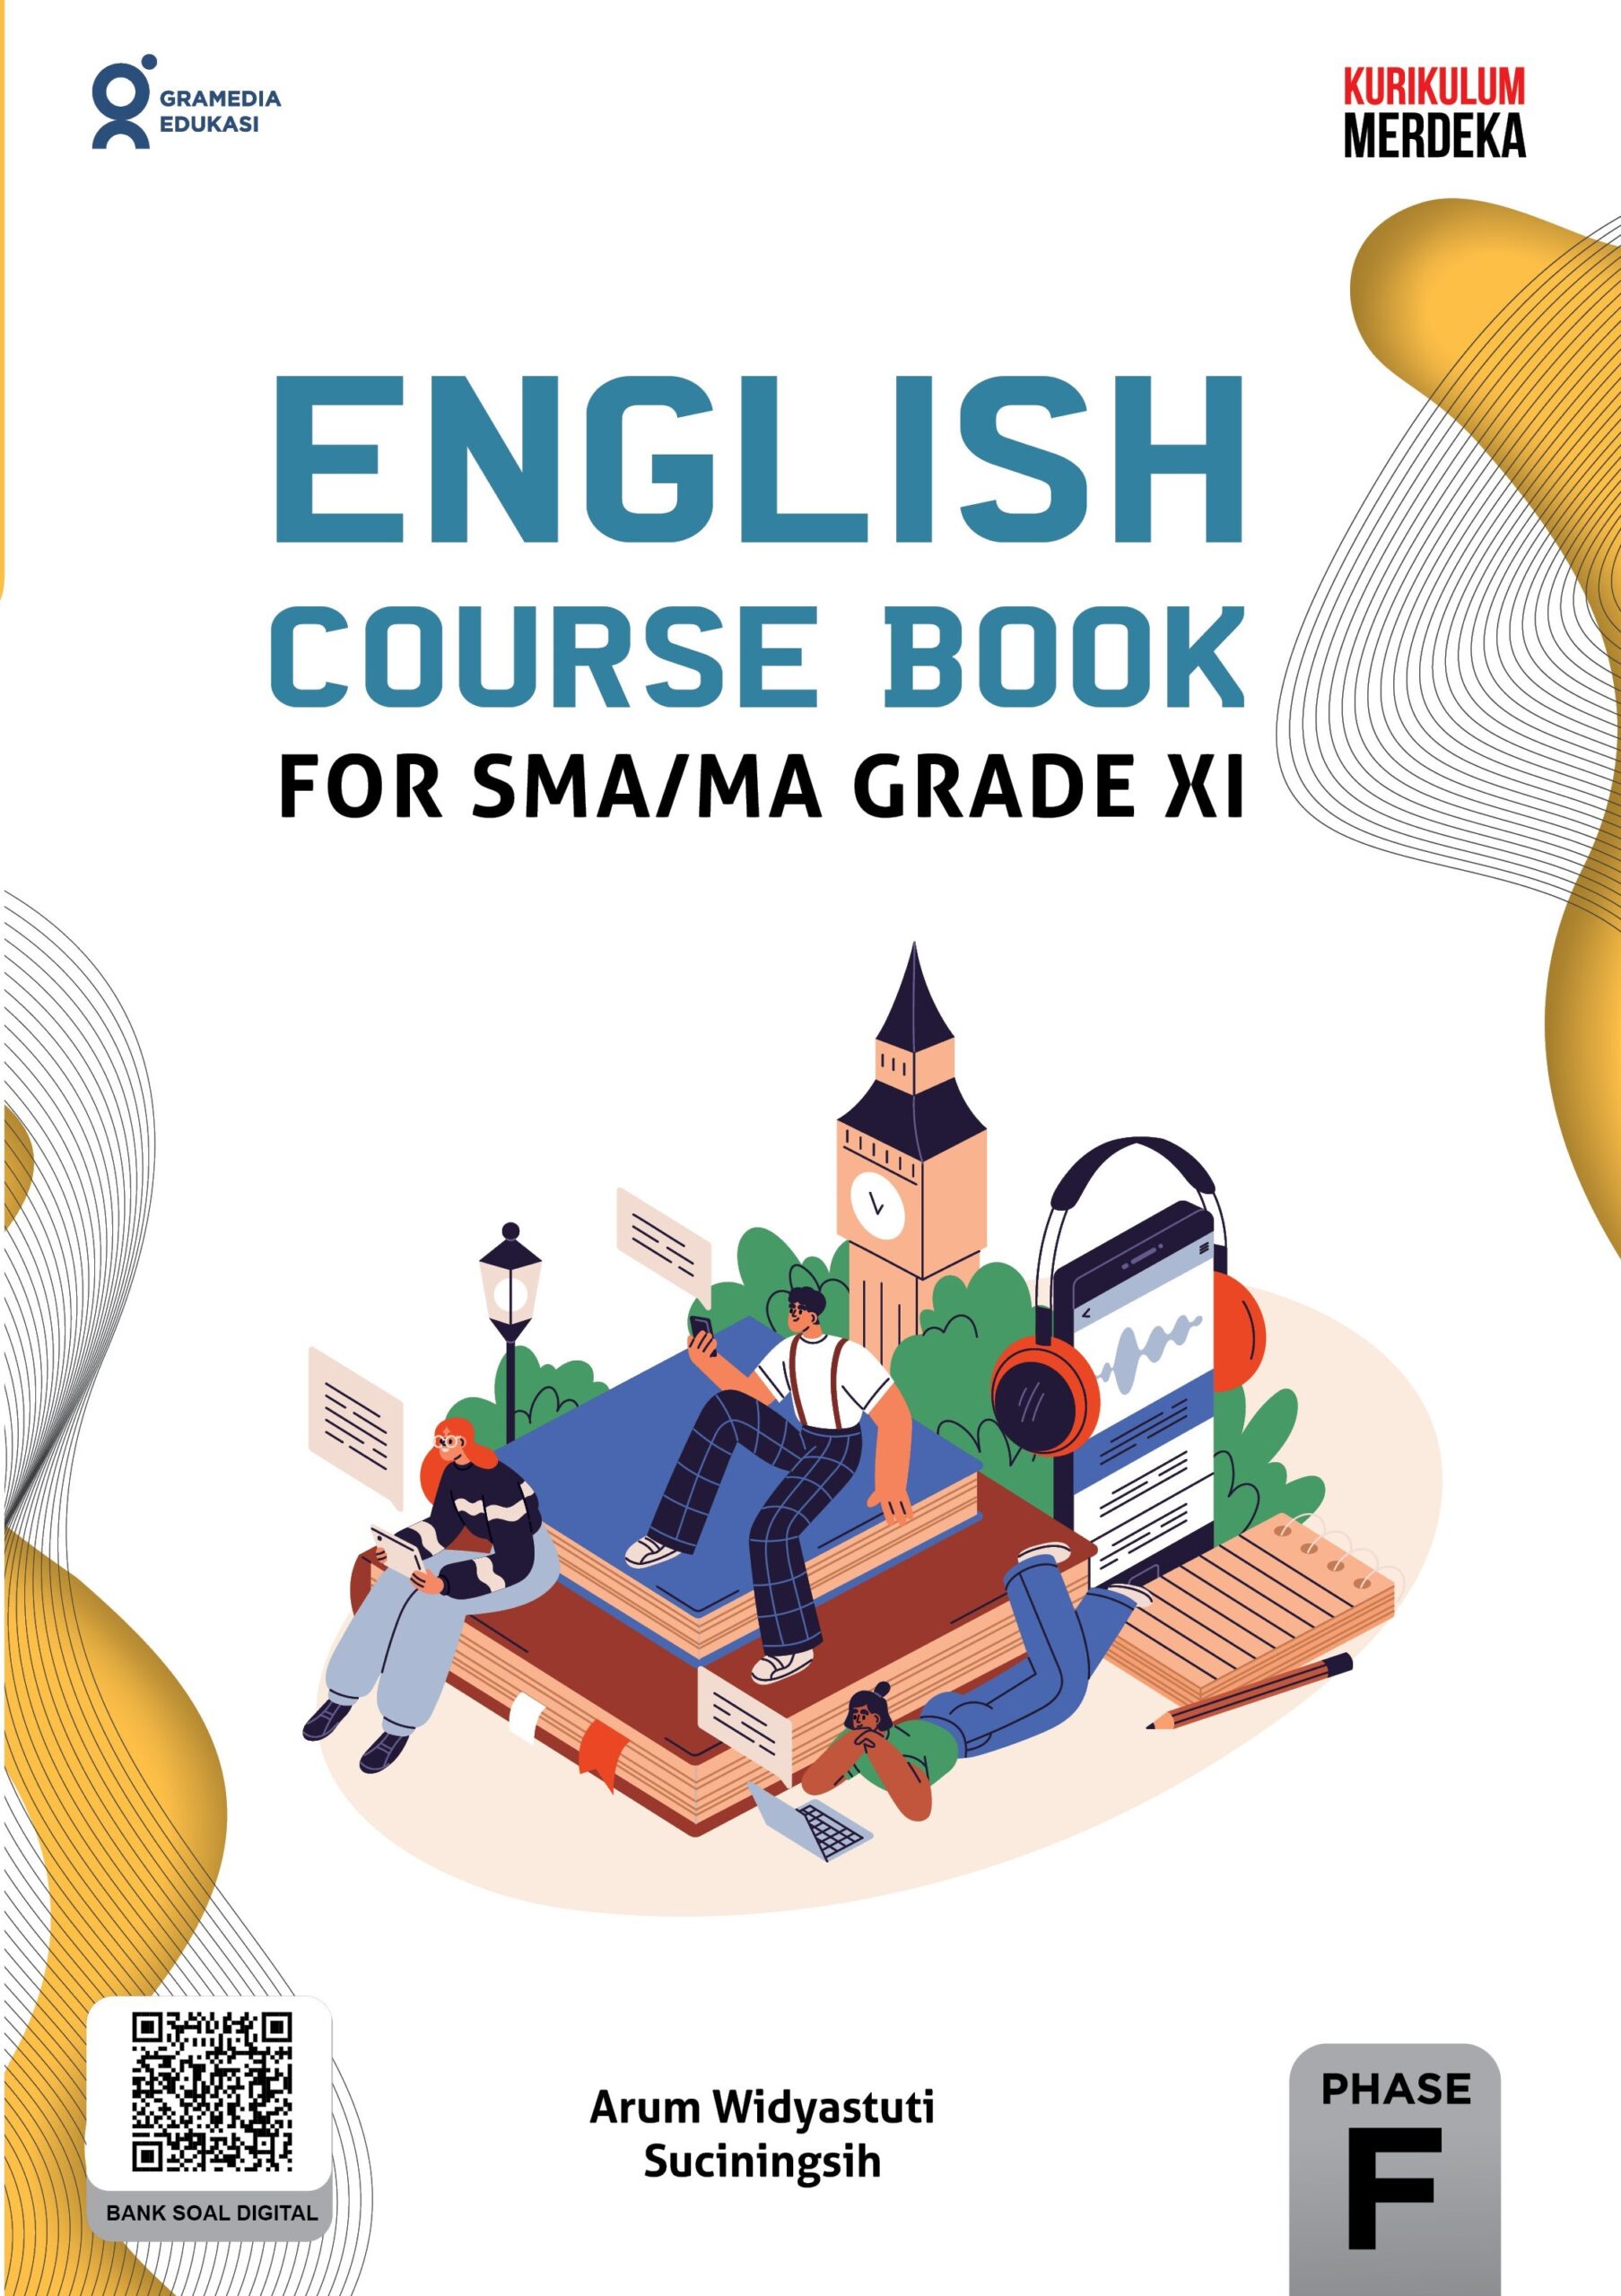 English course book for SMA/MA grade xi